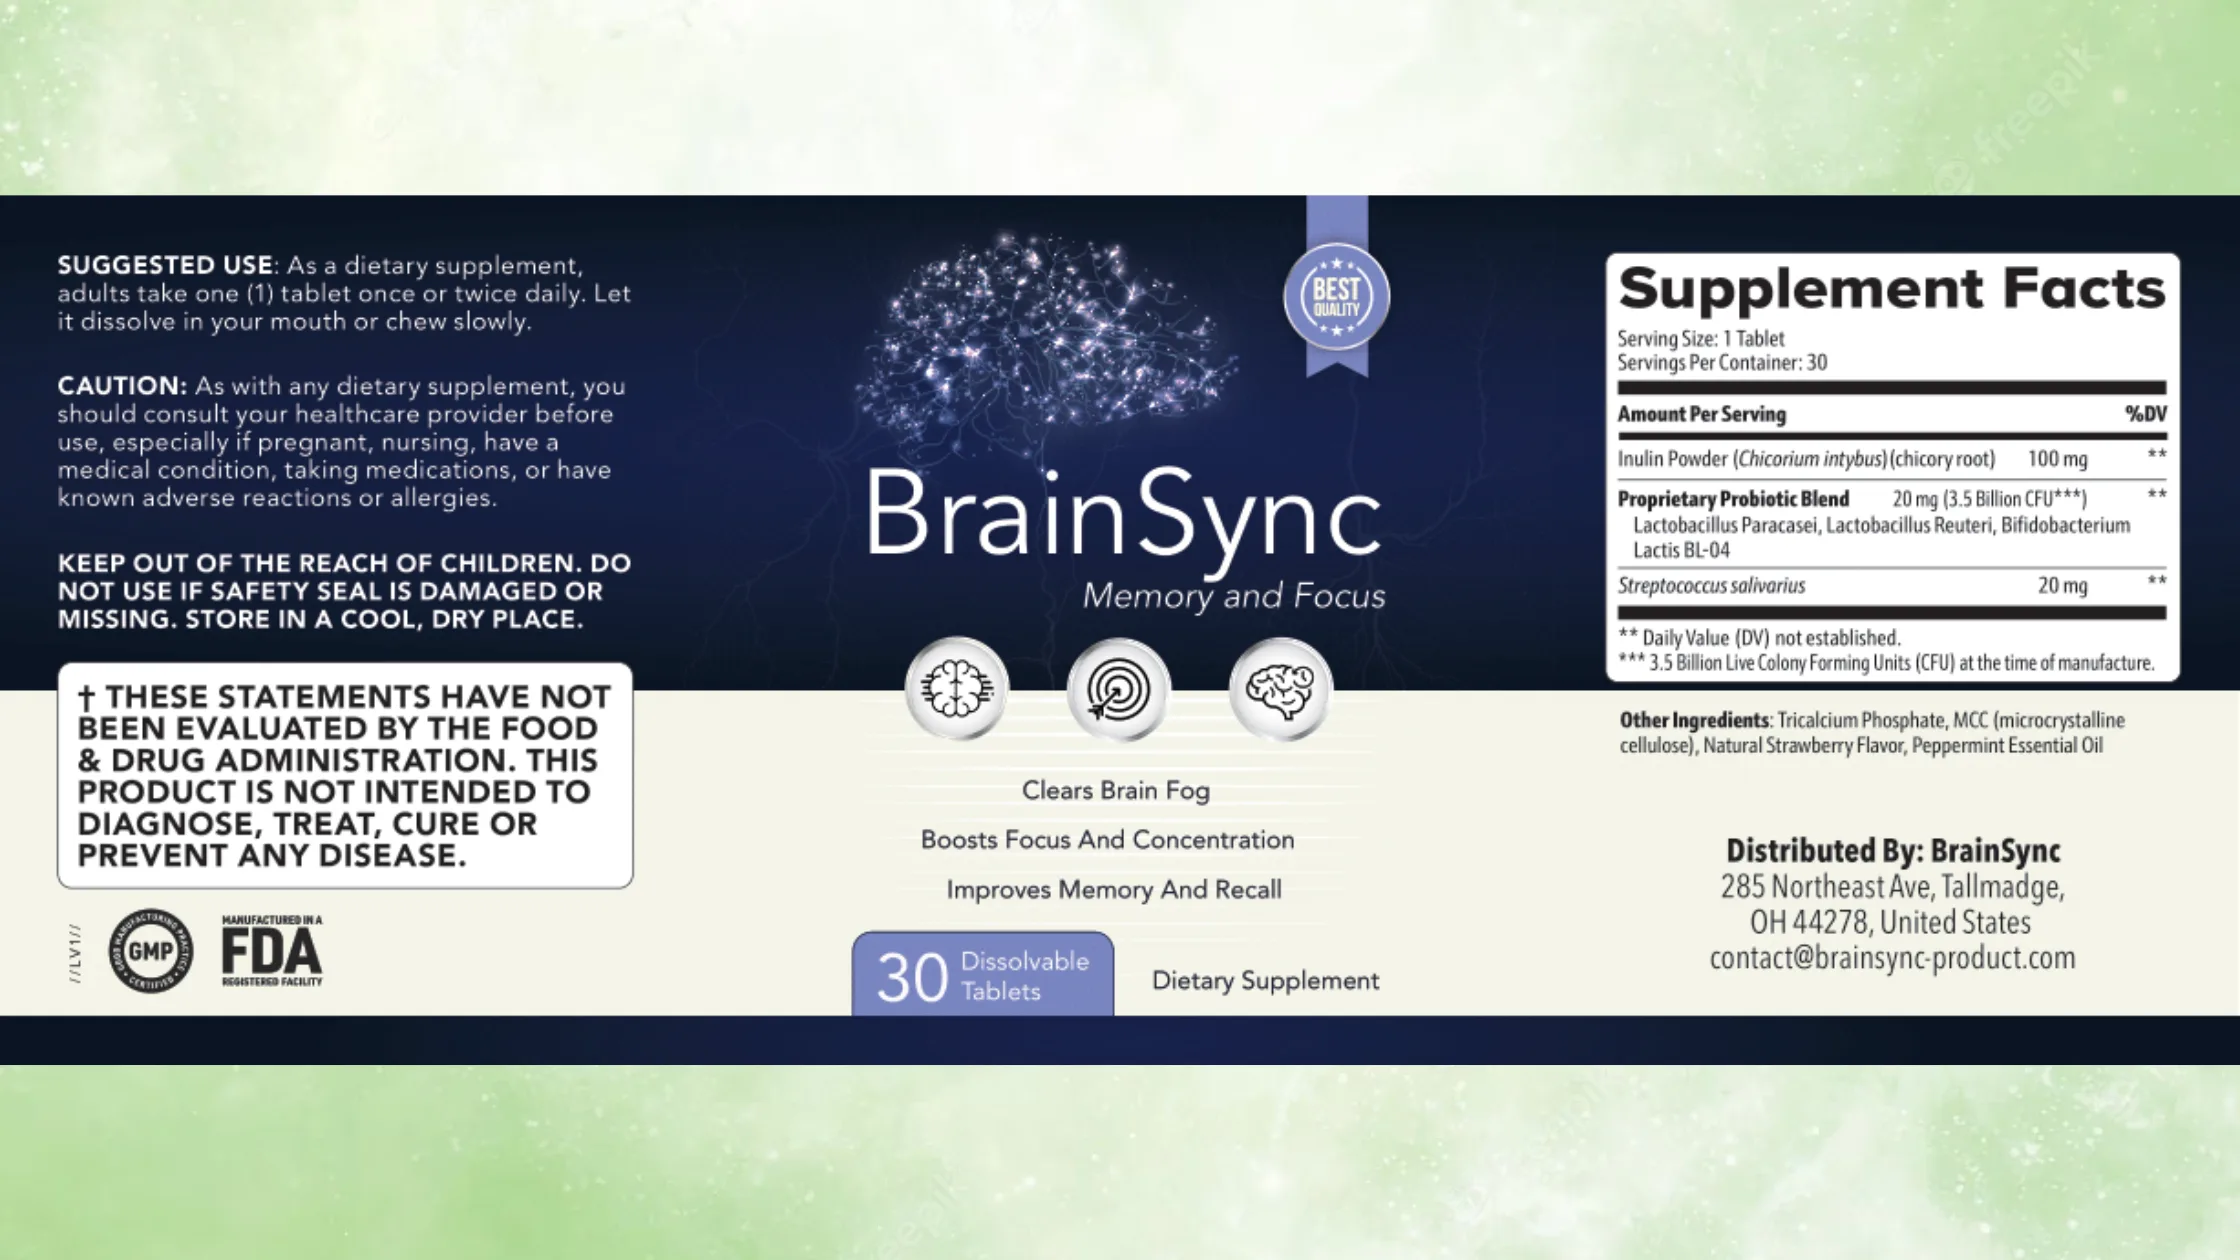 BrainSync Supplement Facts